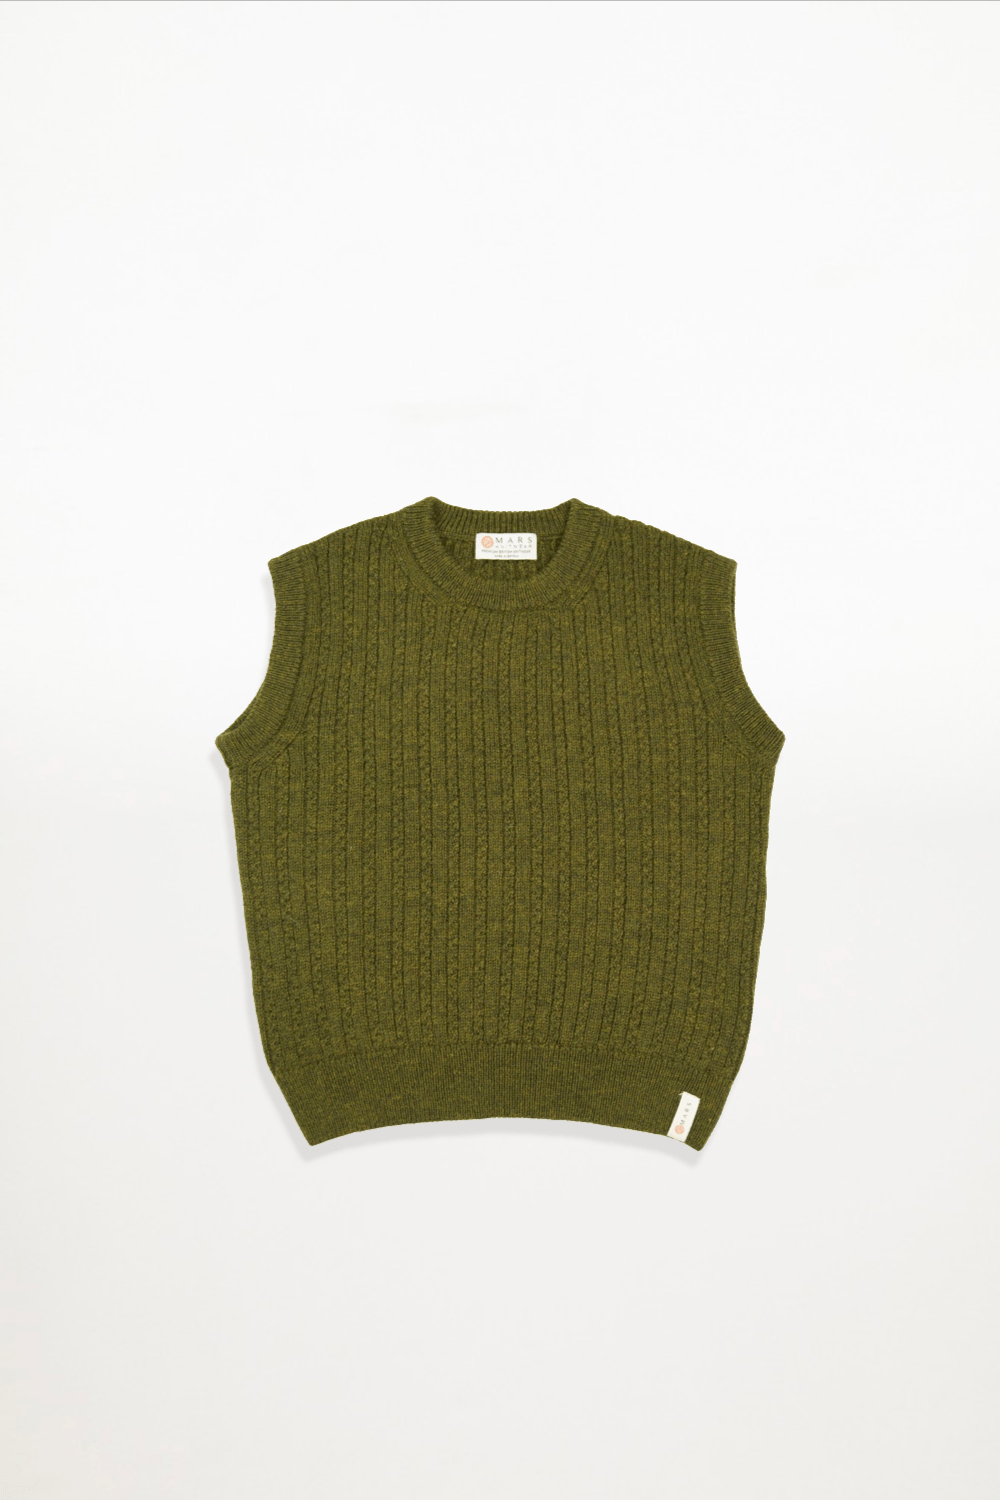 Mars Knitwear - Merino Wool Cable Sleeveless Jumper - Green Melange - Ensemble Studios